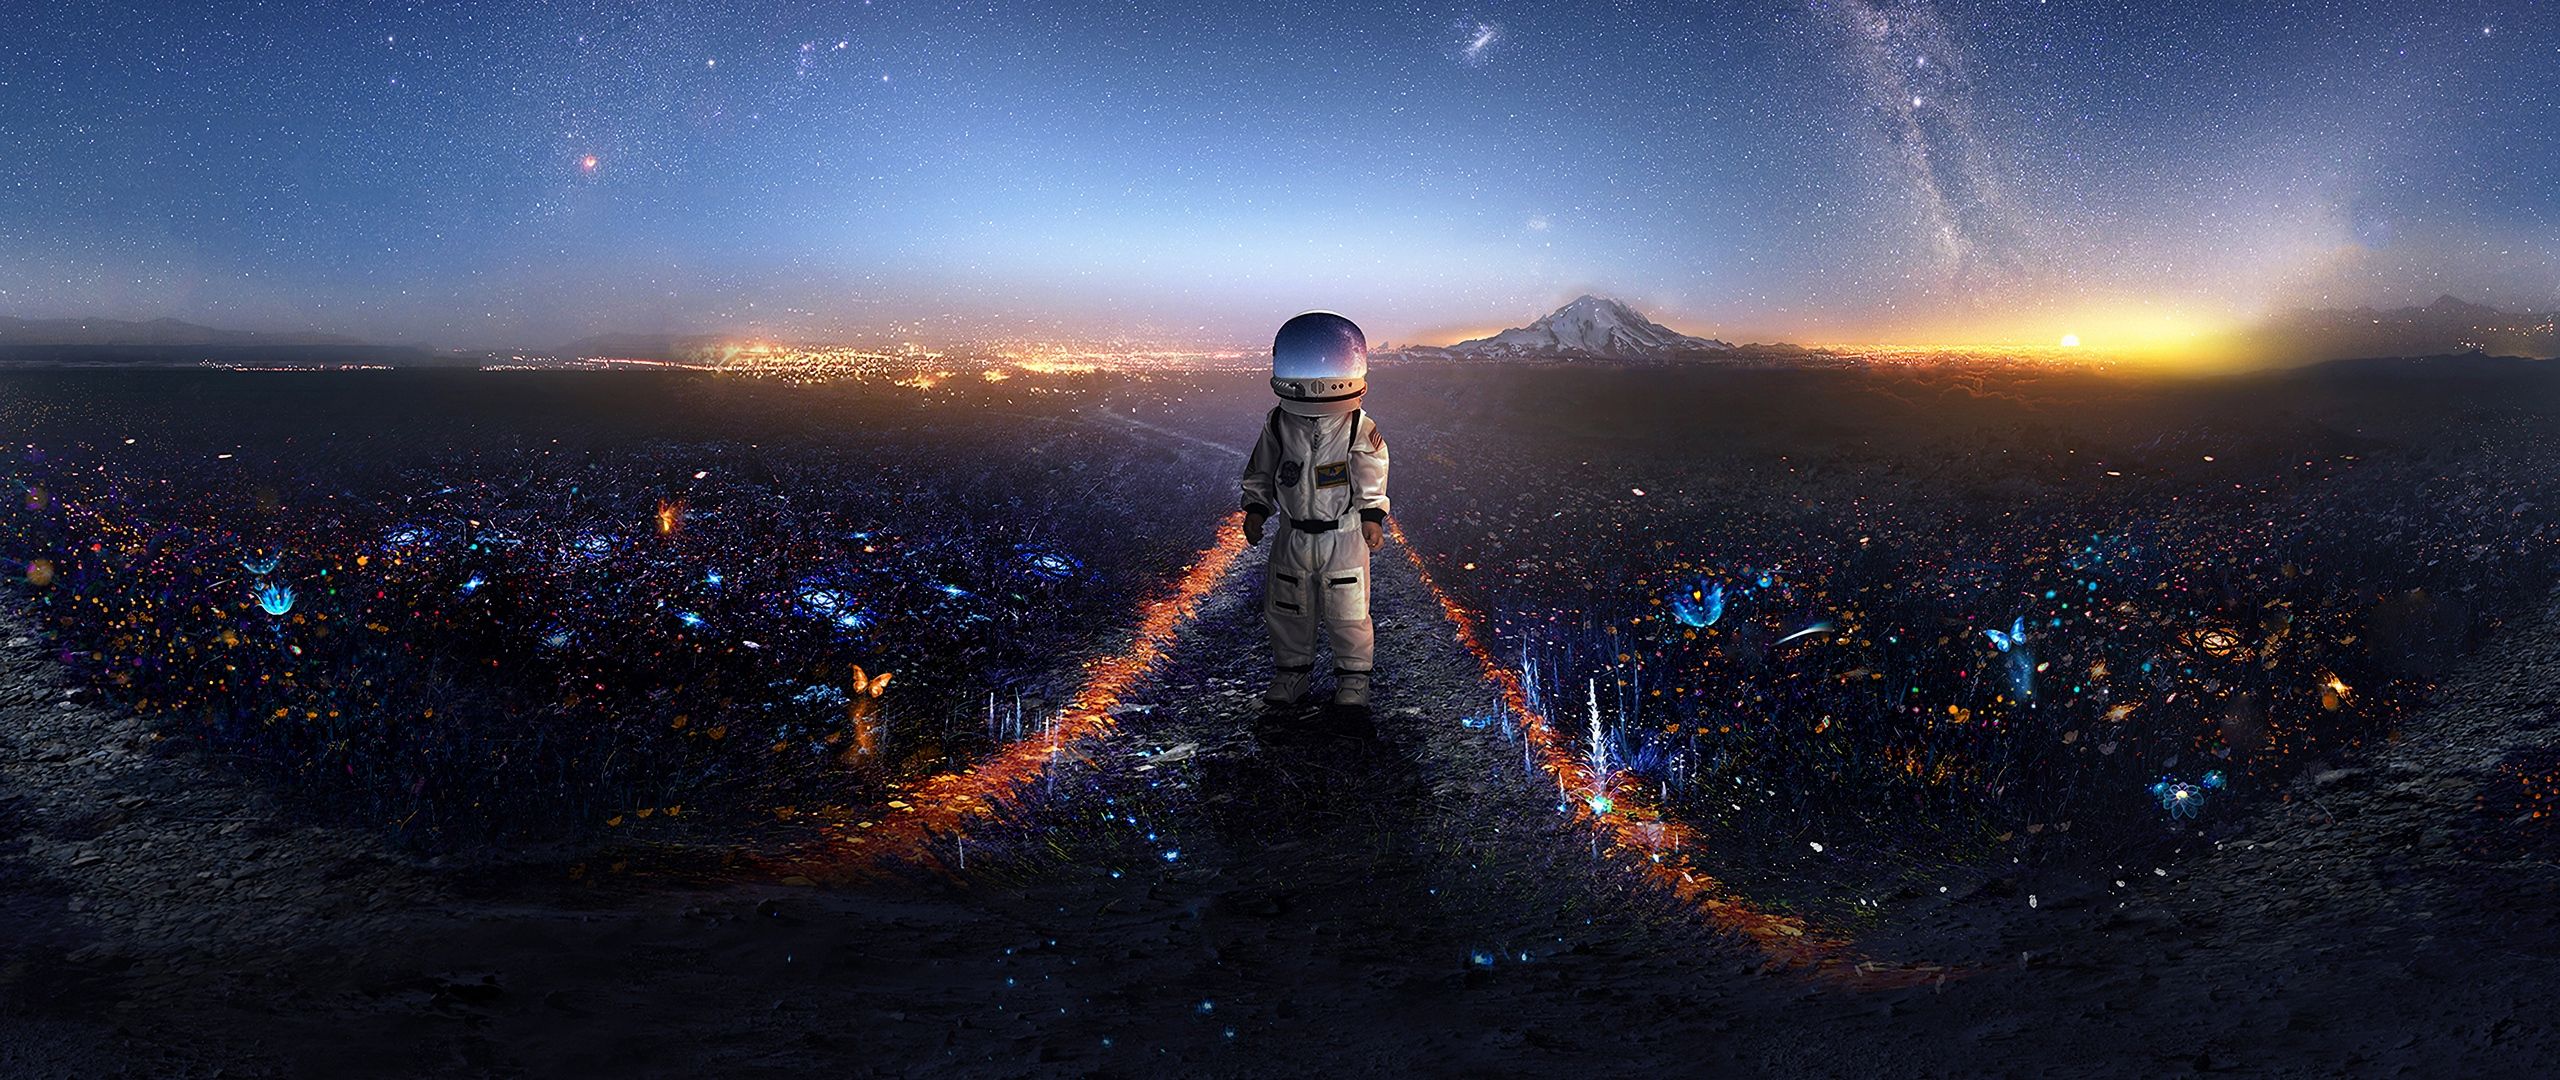 Download wallpaper 2560x1080 astronaut, art, space, stars, galaxy